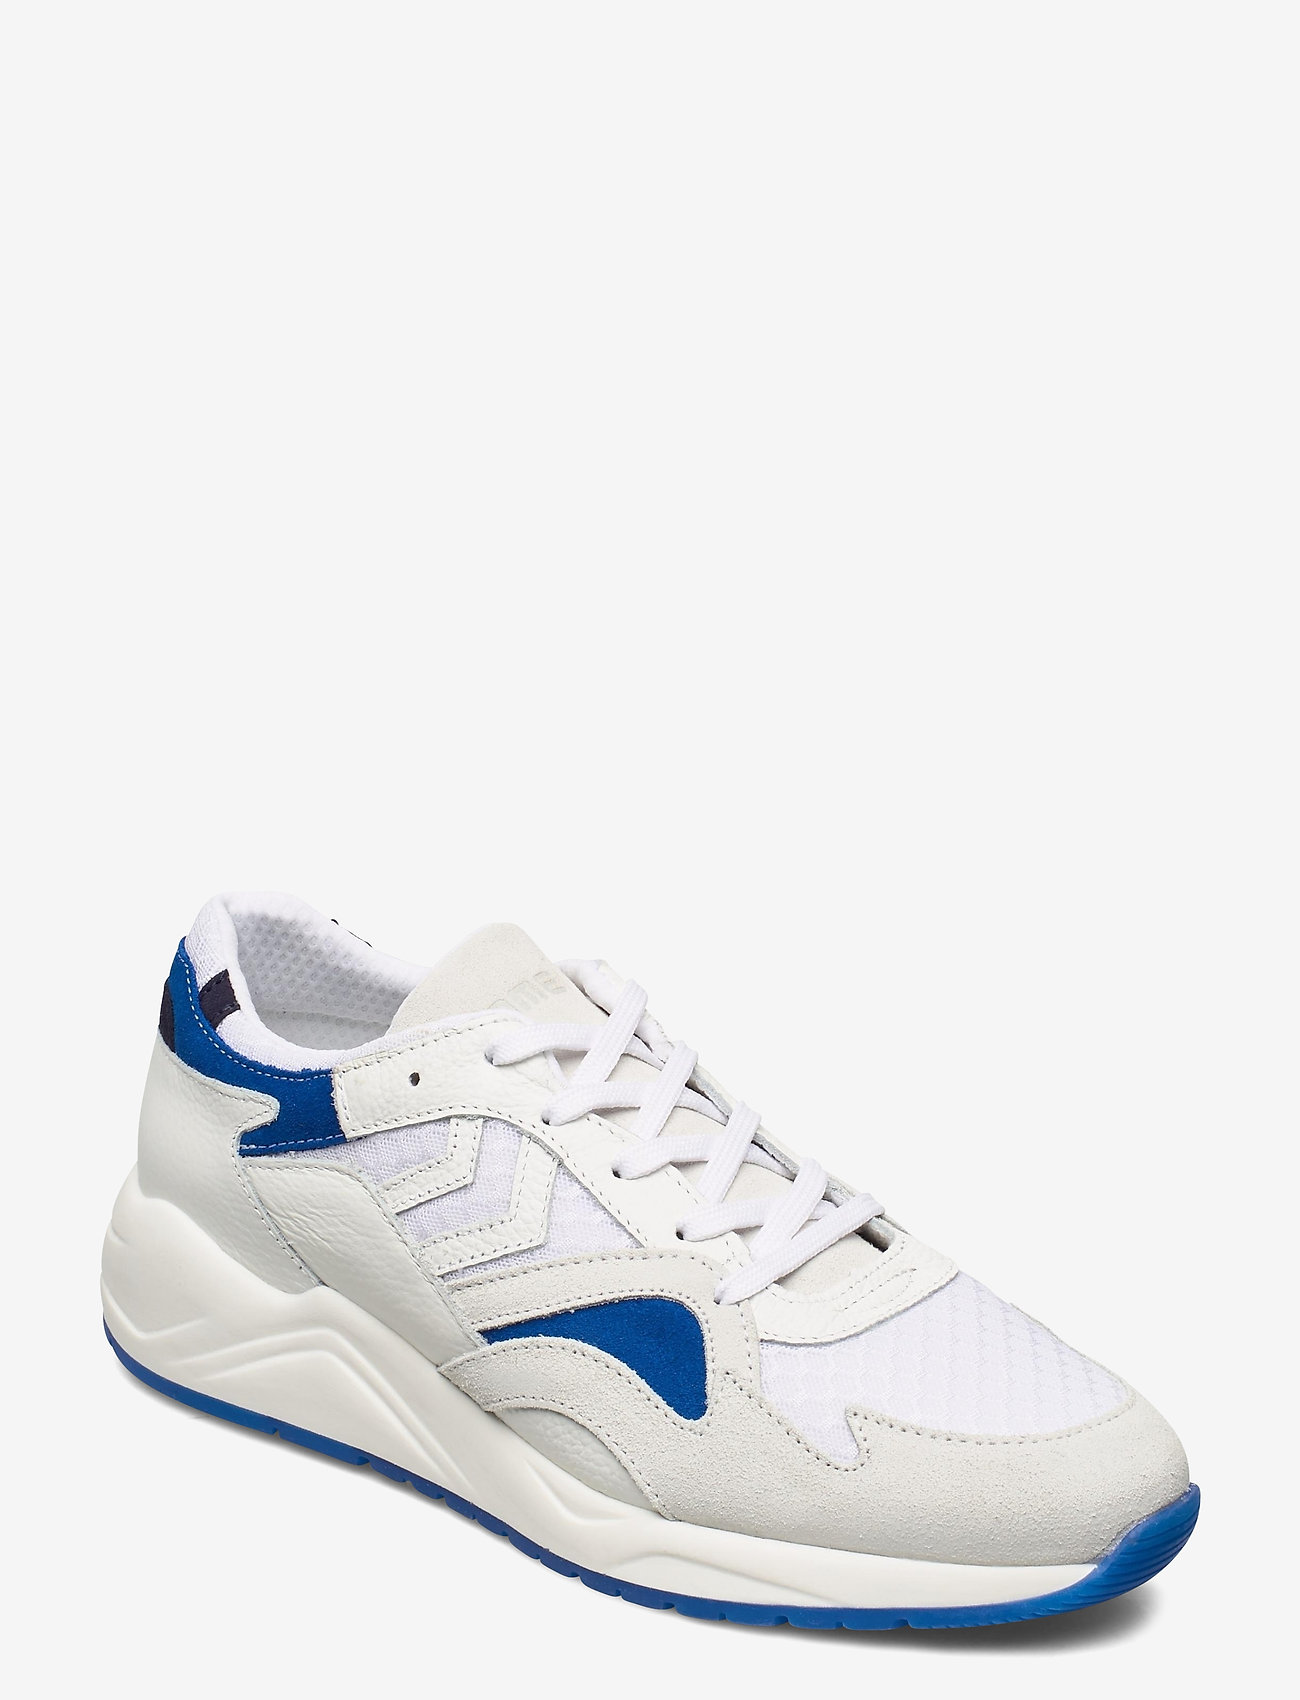 Hummel - EDMONTON PREMIUM - niedrige sneakers - white/blue - 0